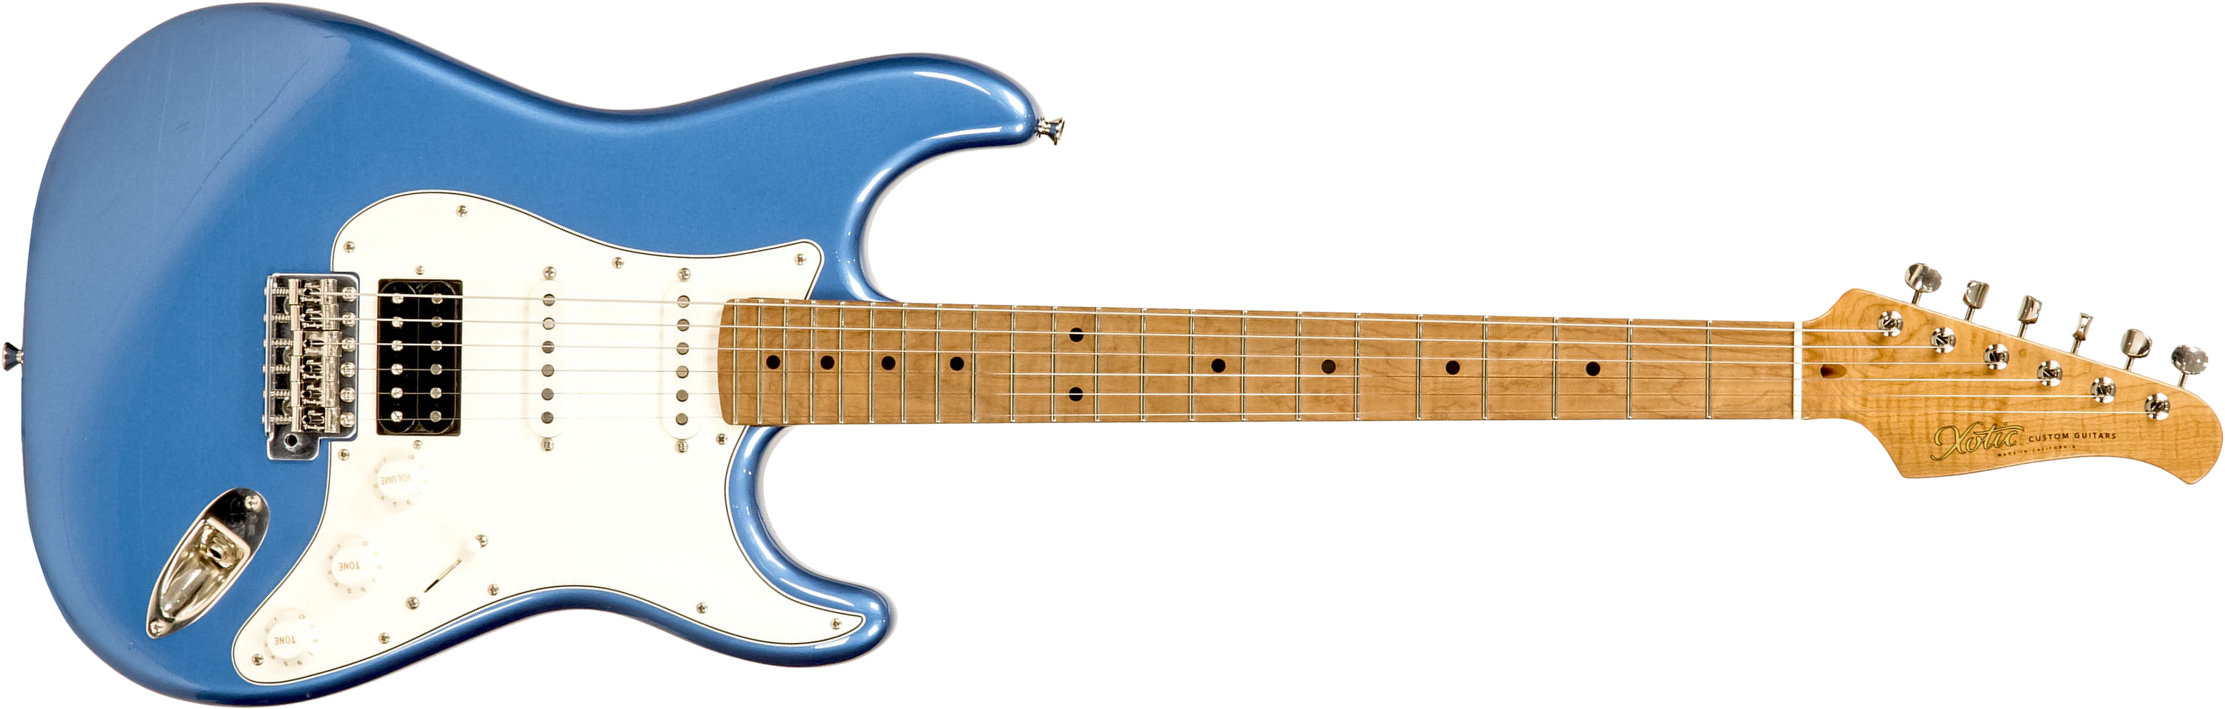 Xotic Xscpro-2 California Class Hss Mn - Light Aging Lake Placid Blue - Str shape electric guitar - Main picture